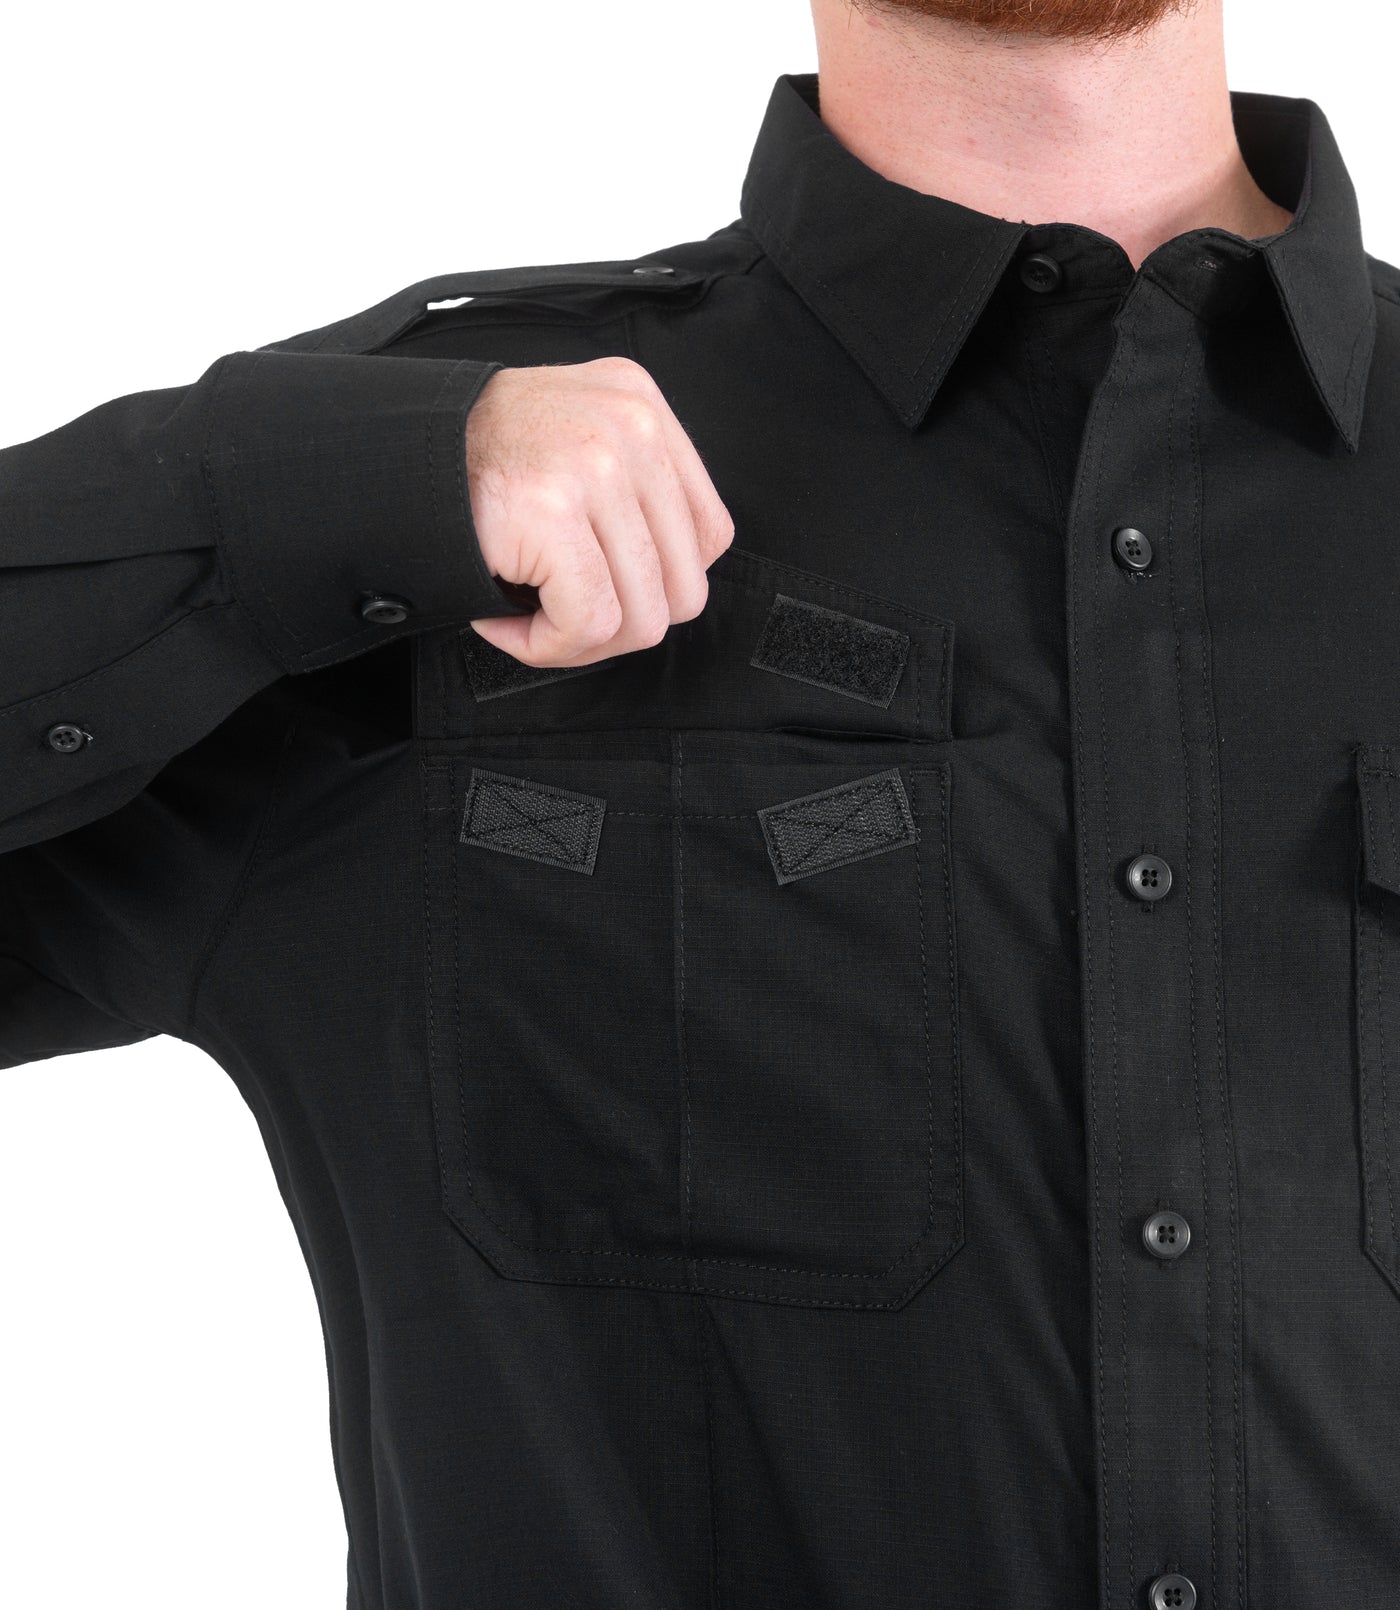 Pocket of Men's Pro Duty Uniform Shirt in Black